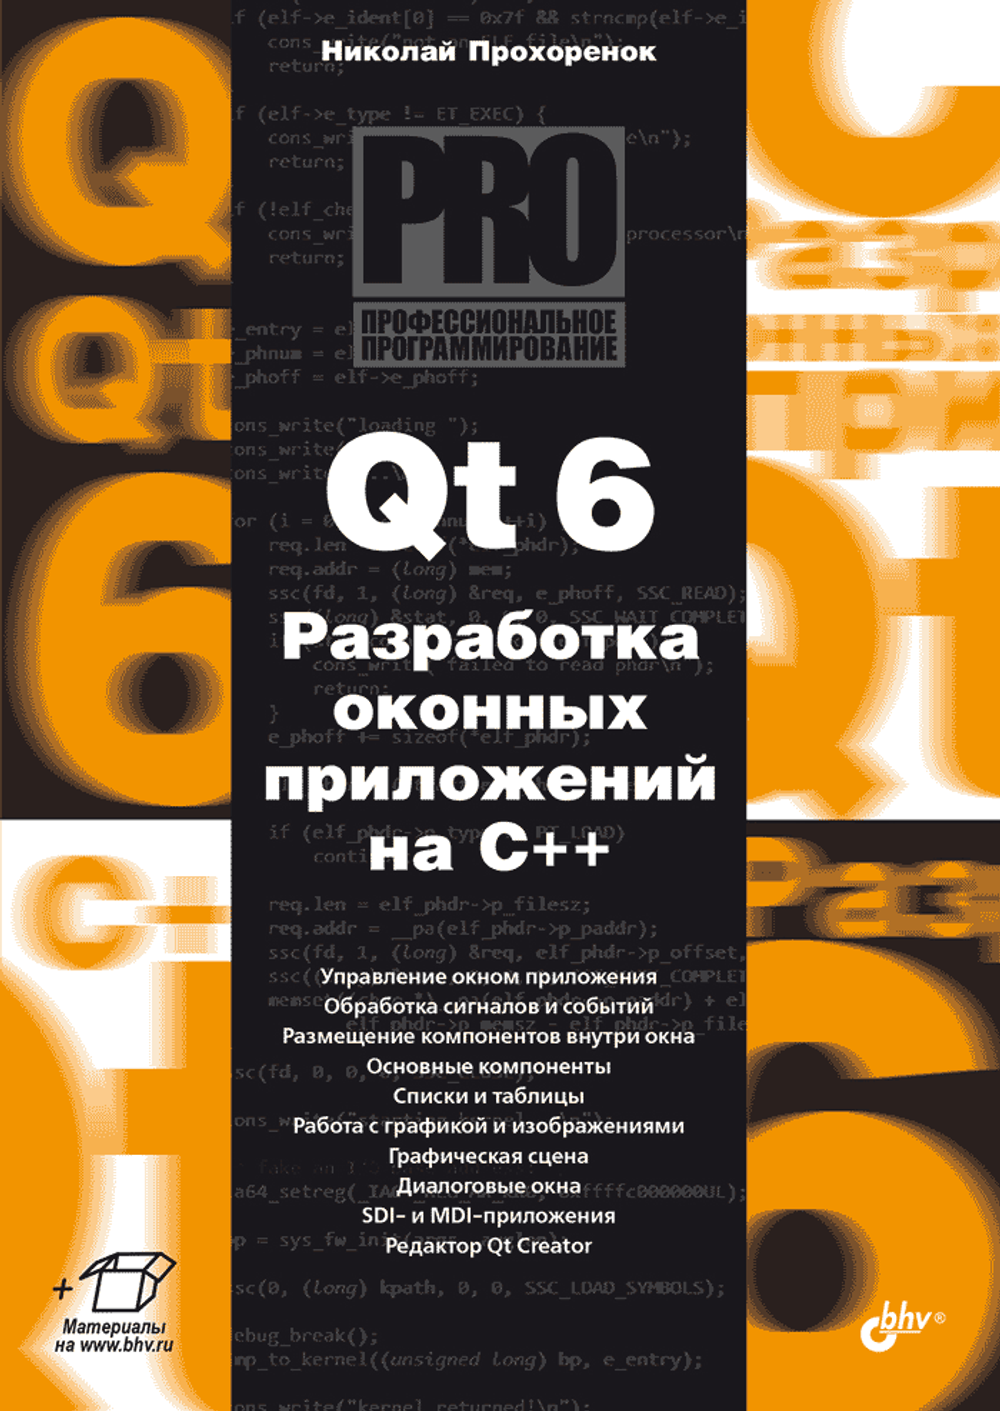 Книга: Прохоренок Н.А. "Qt 6. Разработка оконных приложений на C++"